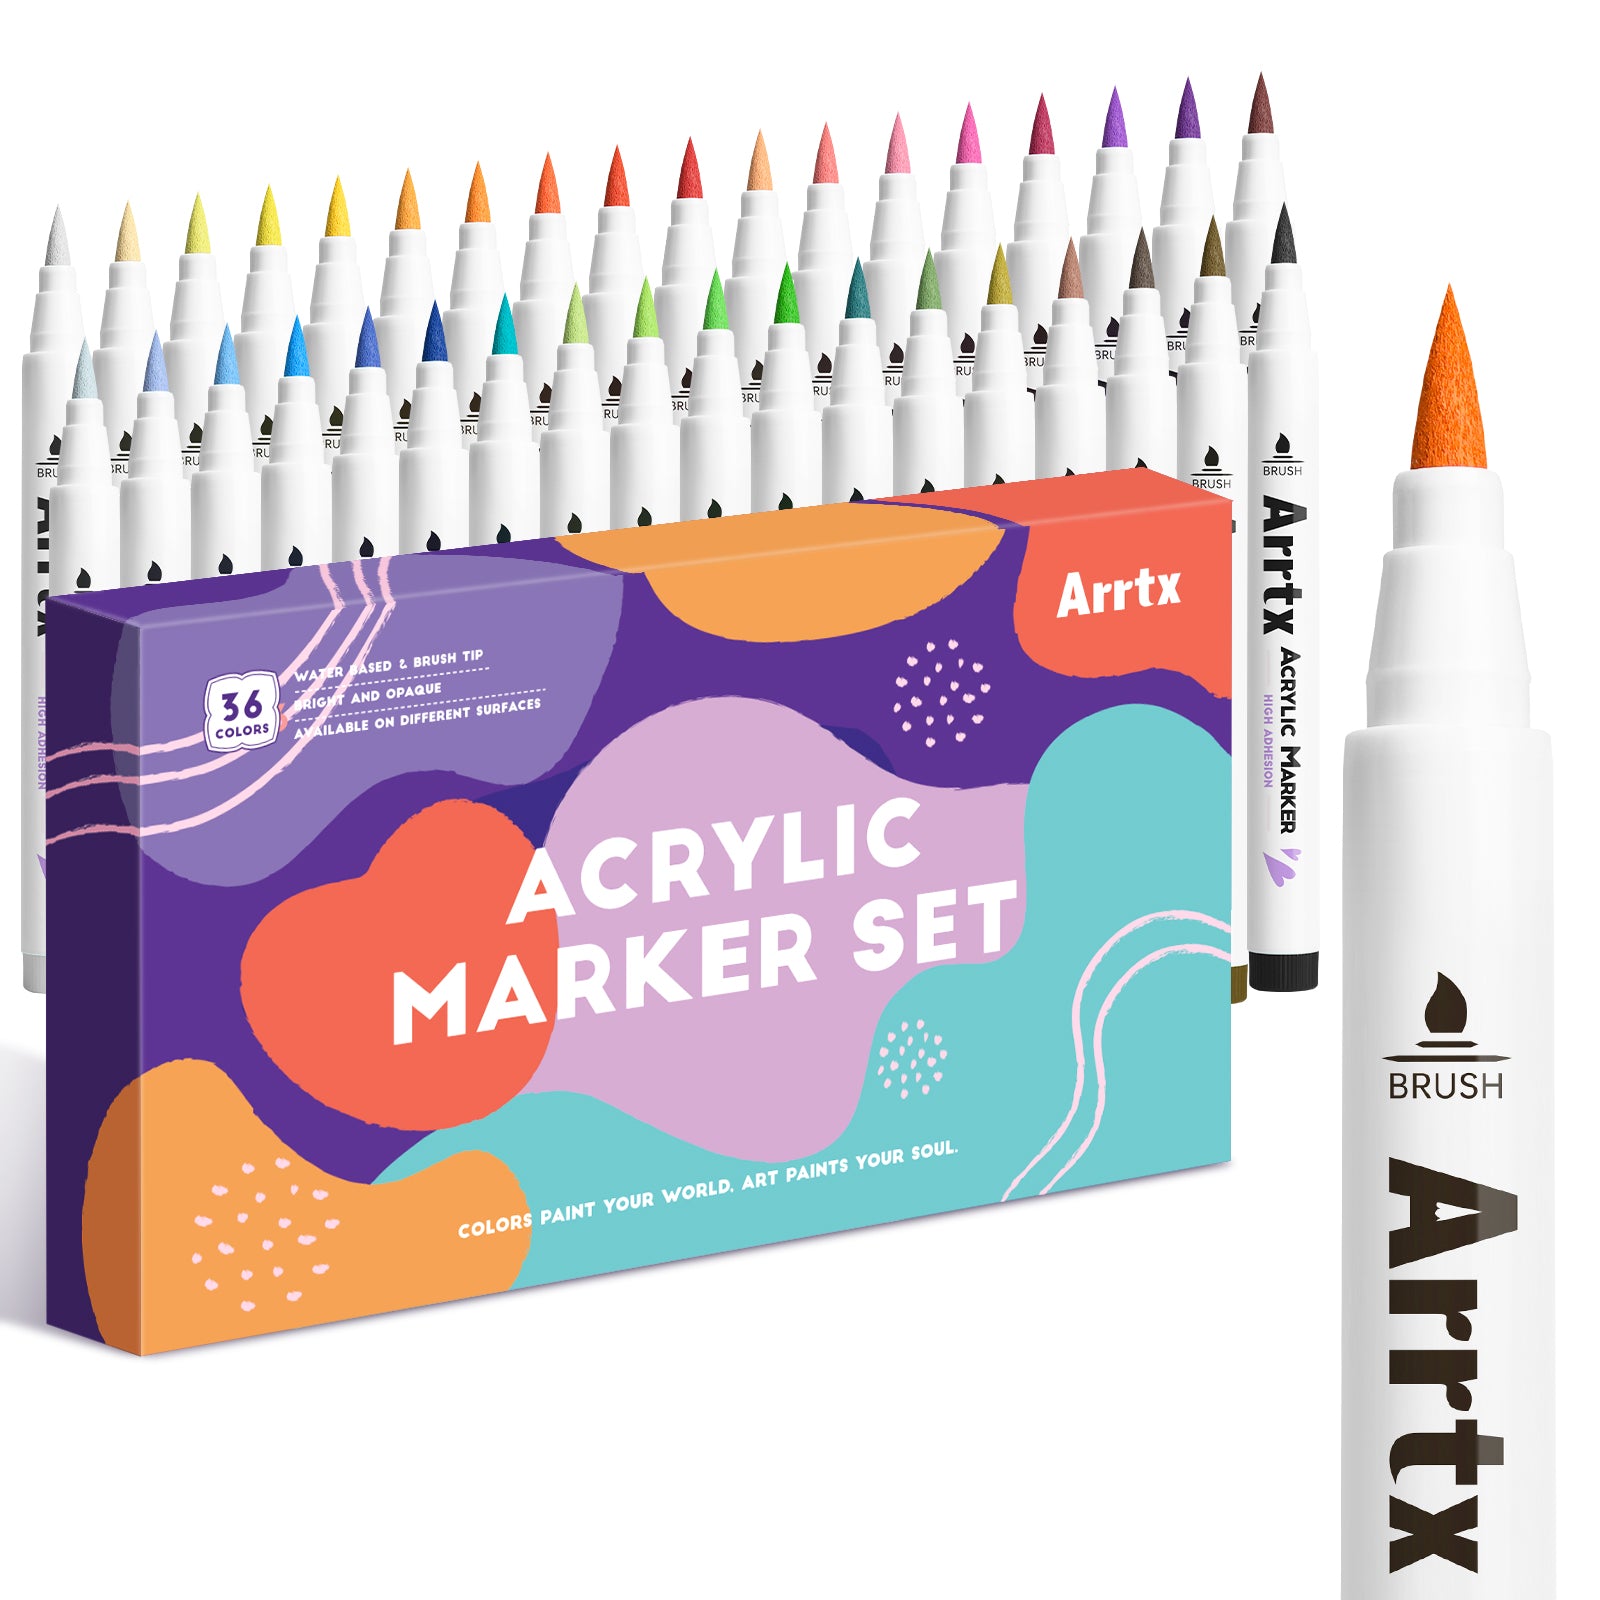 Arrtx 36 Colors Acrylic Marker Extra Brush Tip Paint Pens